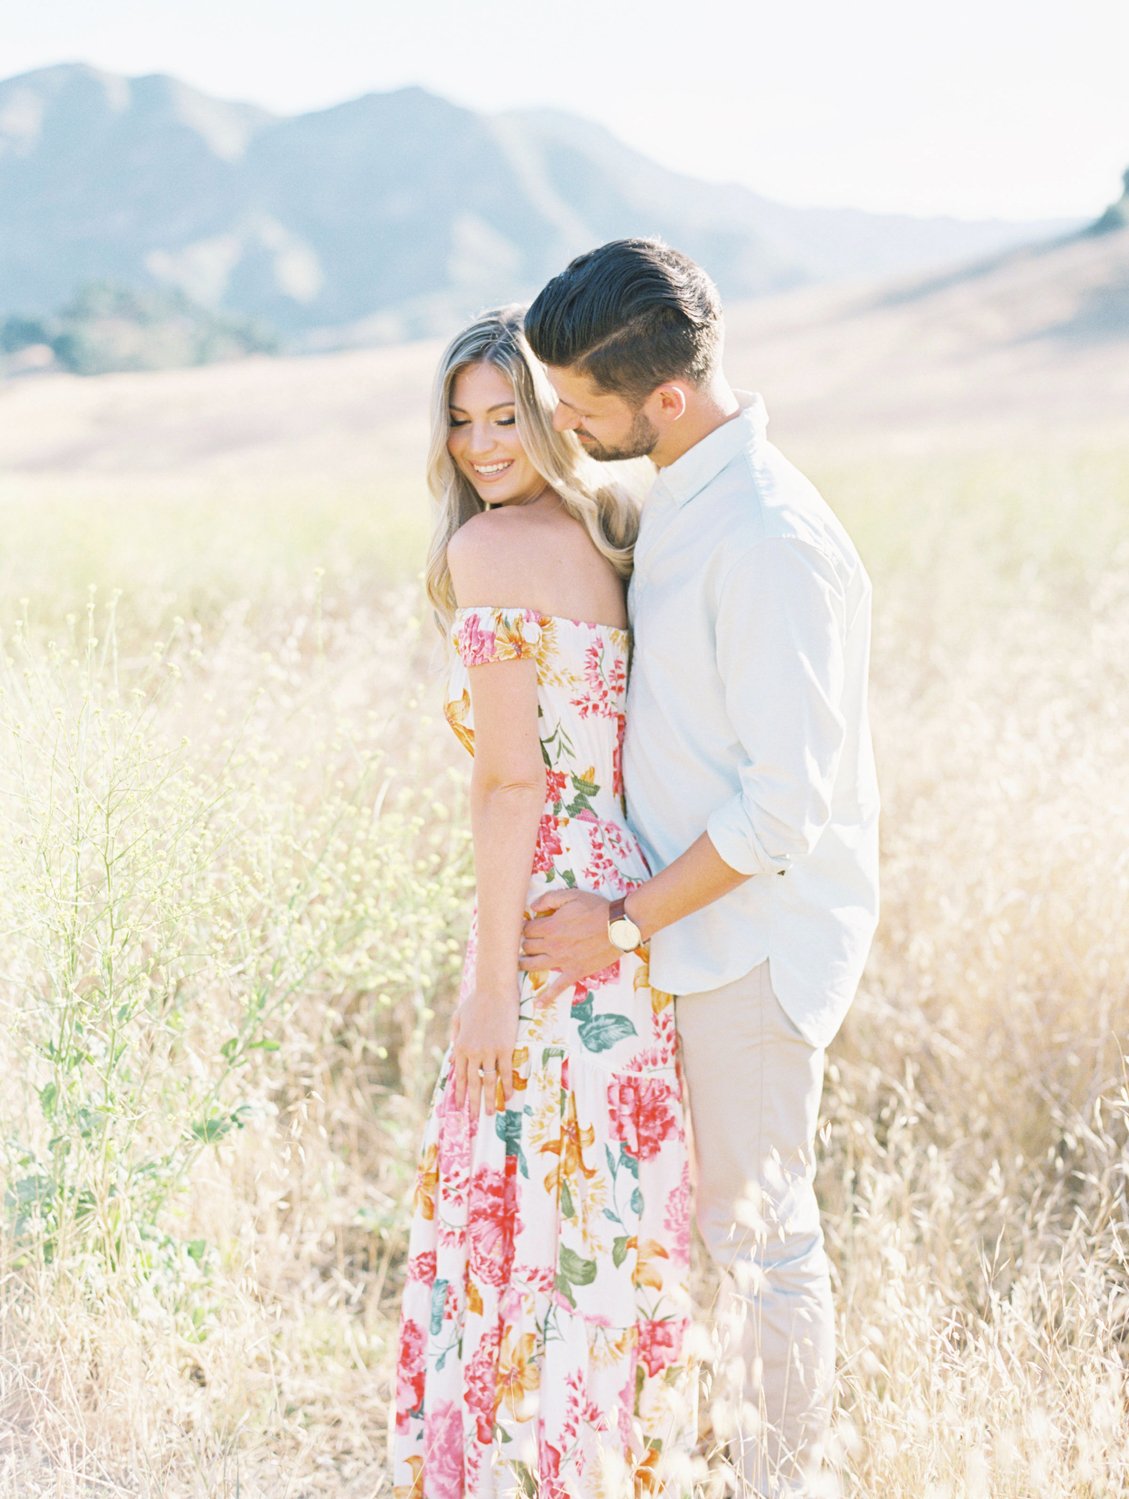 wisteria-photography.com | Wisteria Photography | Malibu Canyon | Weddings Engagement | Southern California Photographer-6.jpg